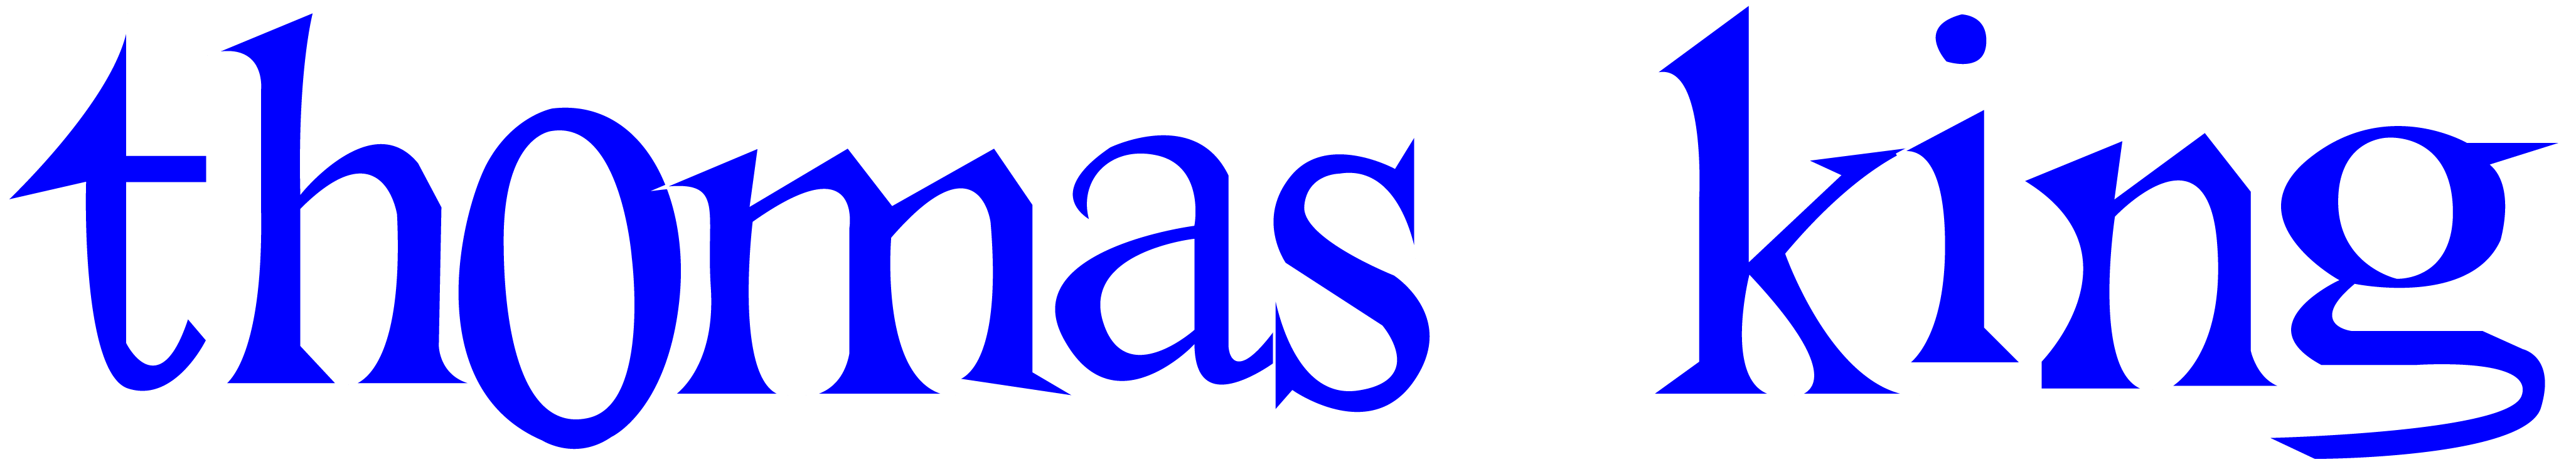 tk-logo-blue